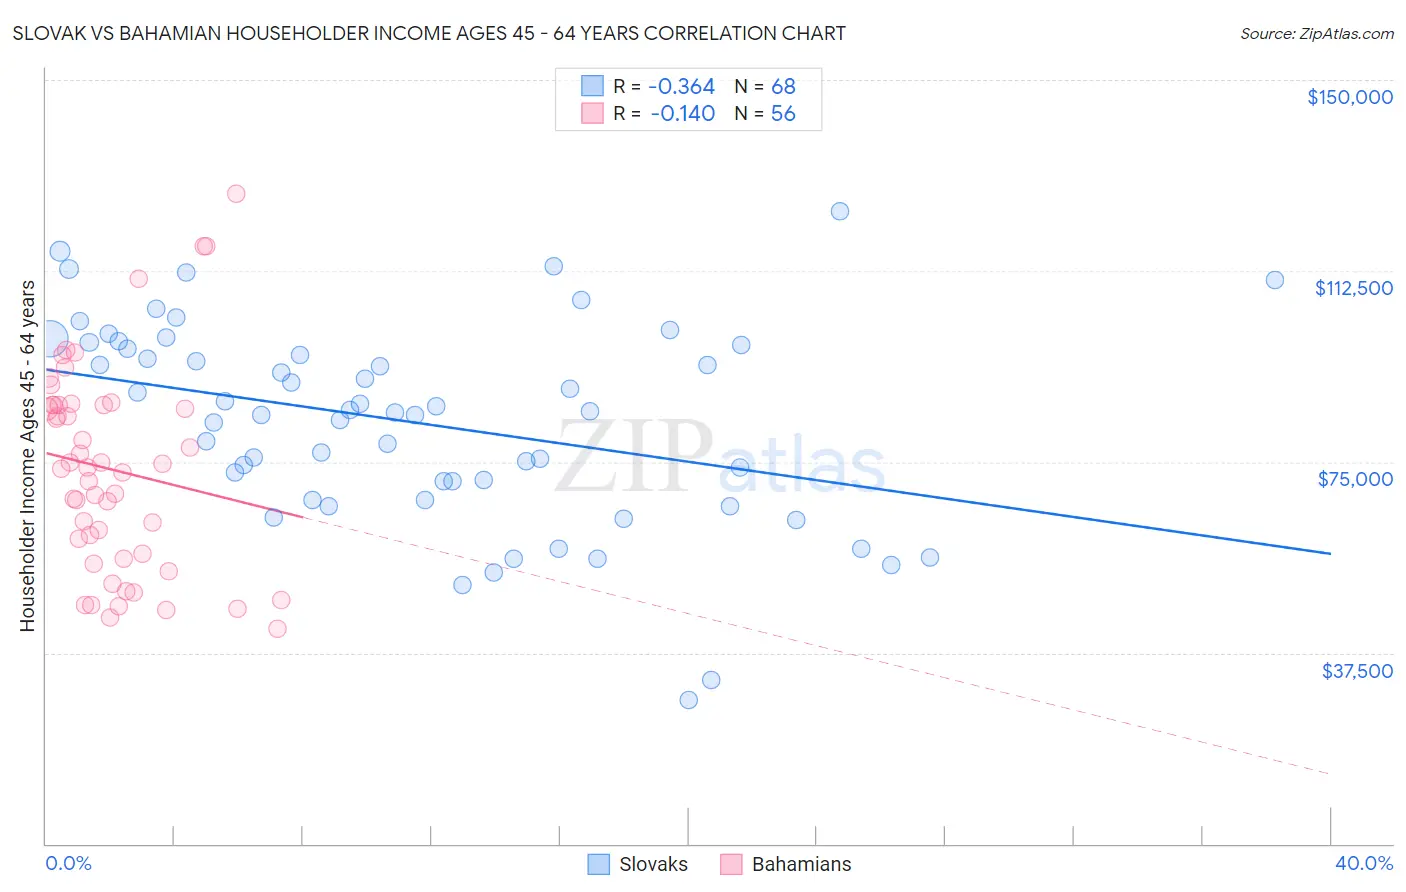 Slovak vs Bahamian Householder Income Ages 45 - 64 years